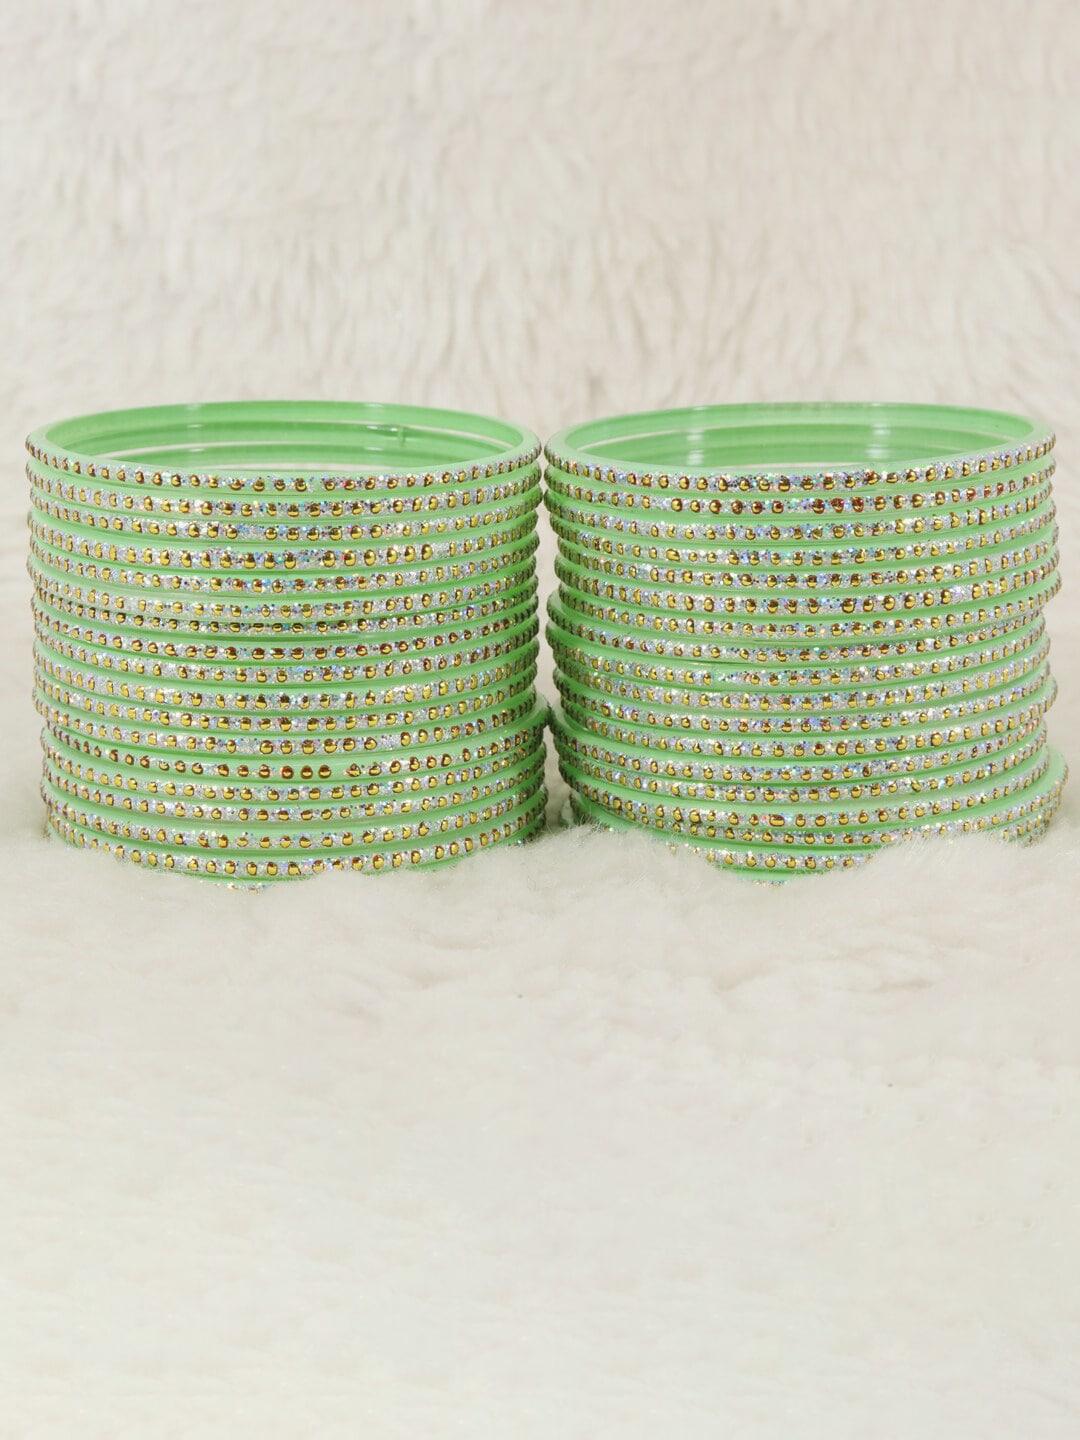 nmii set of 36 embellished light weight bangles